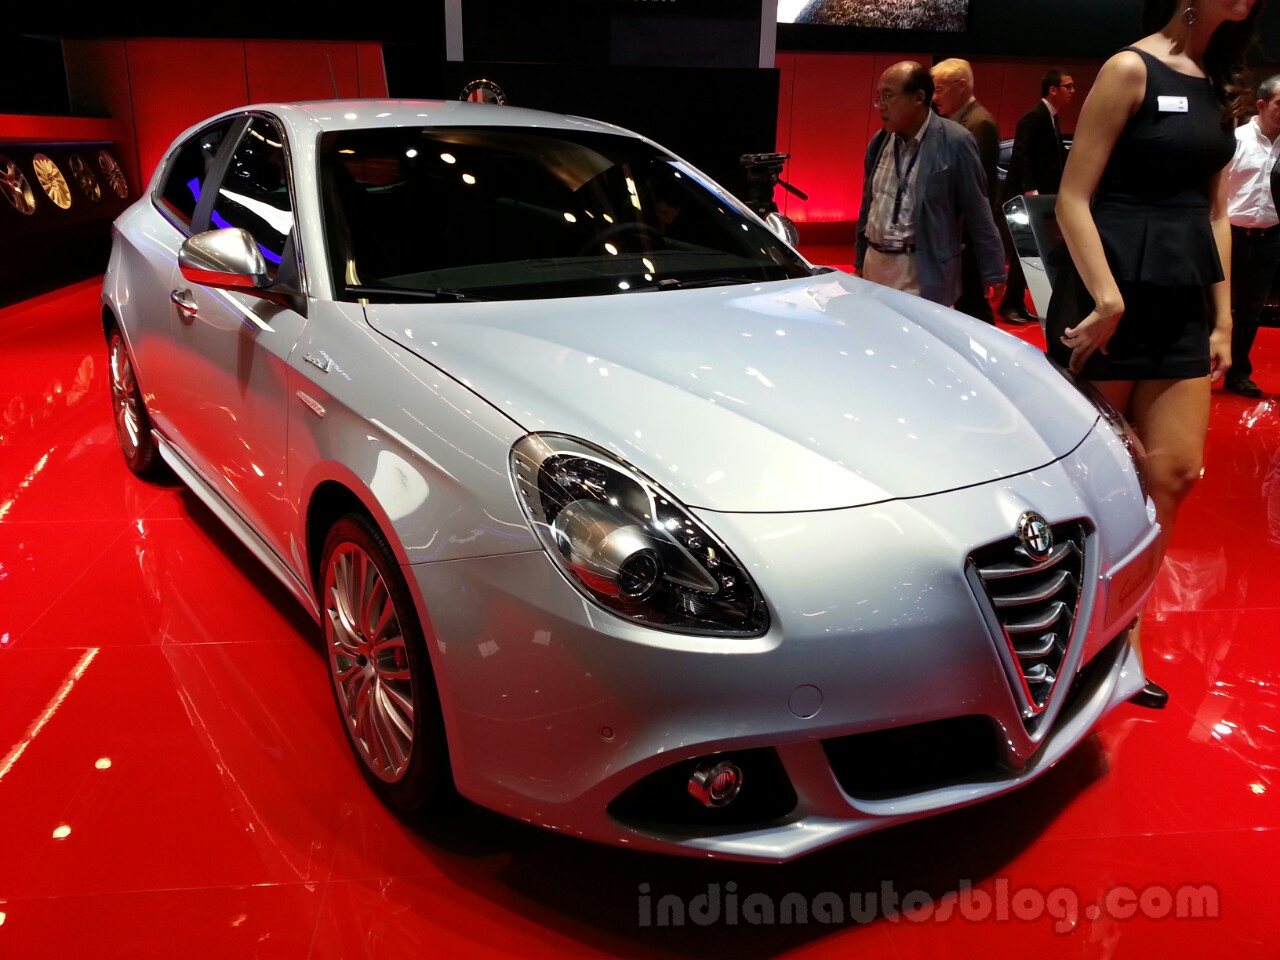 2014 Alfa Romeo Giulietta facelift revealed [Frankfurt Live]